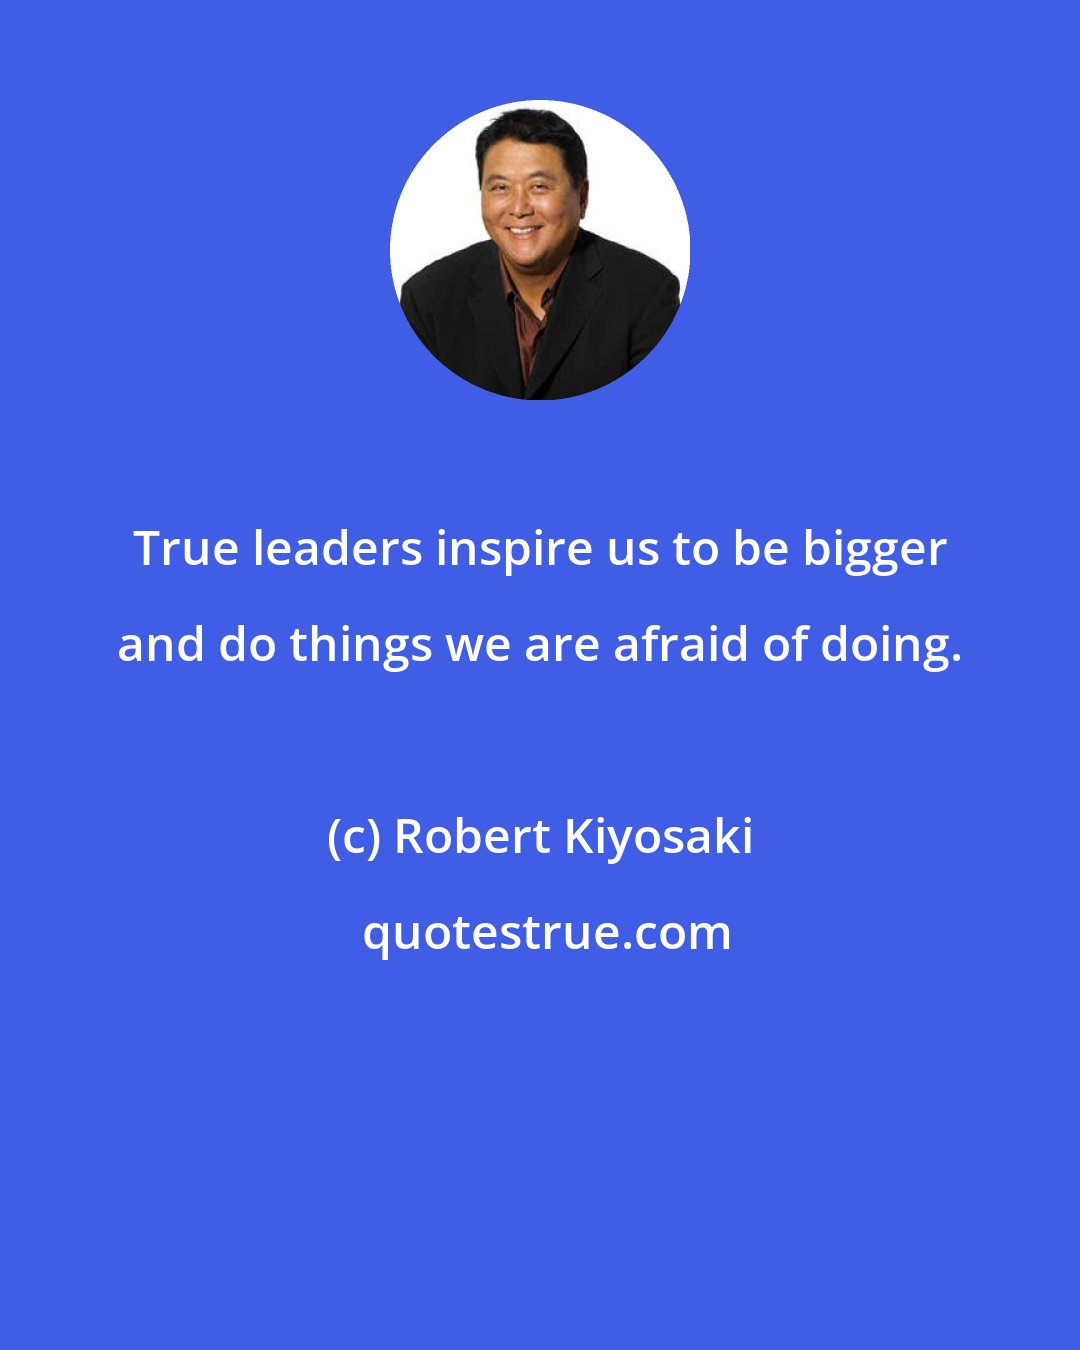 Robert Kiyosaki: True leaders inspire us to be bigger and do things we are afraid of doing.